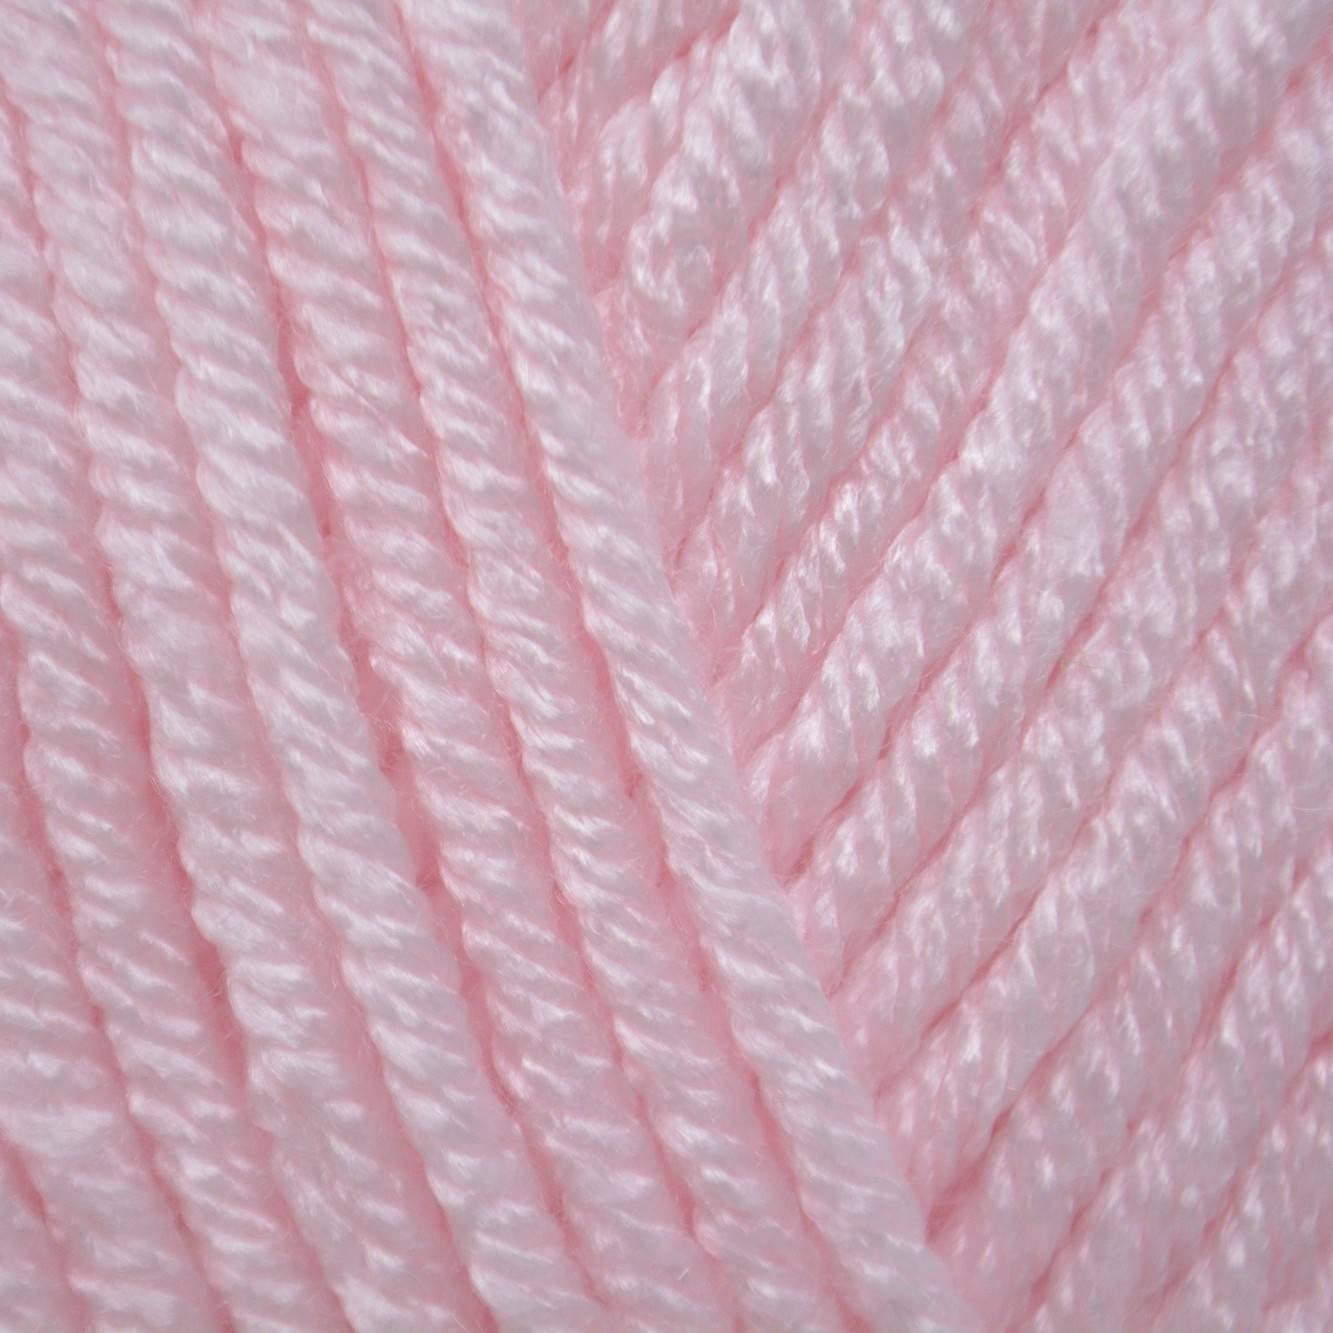 Scheepjes Chunky Monkey Yarn - 1240 Baby Pink